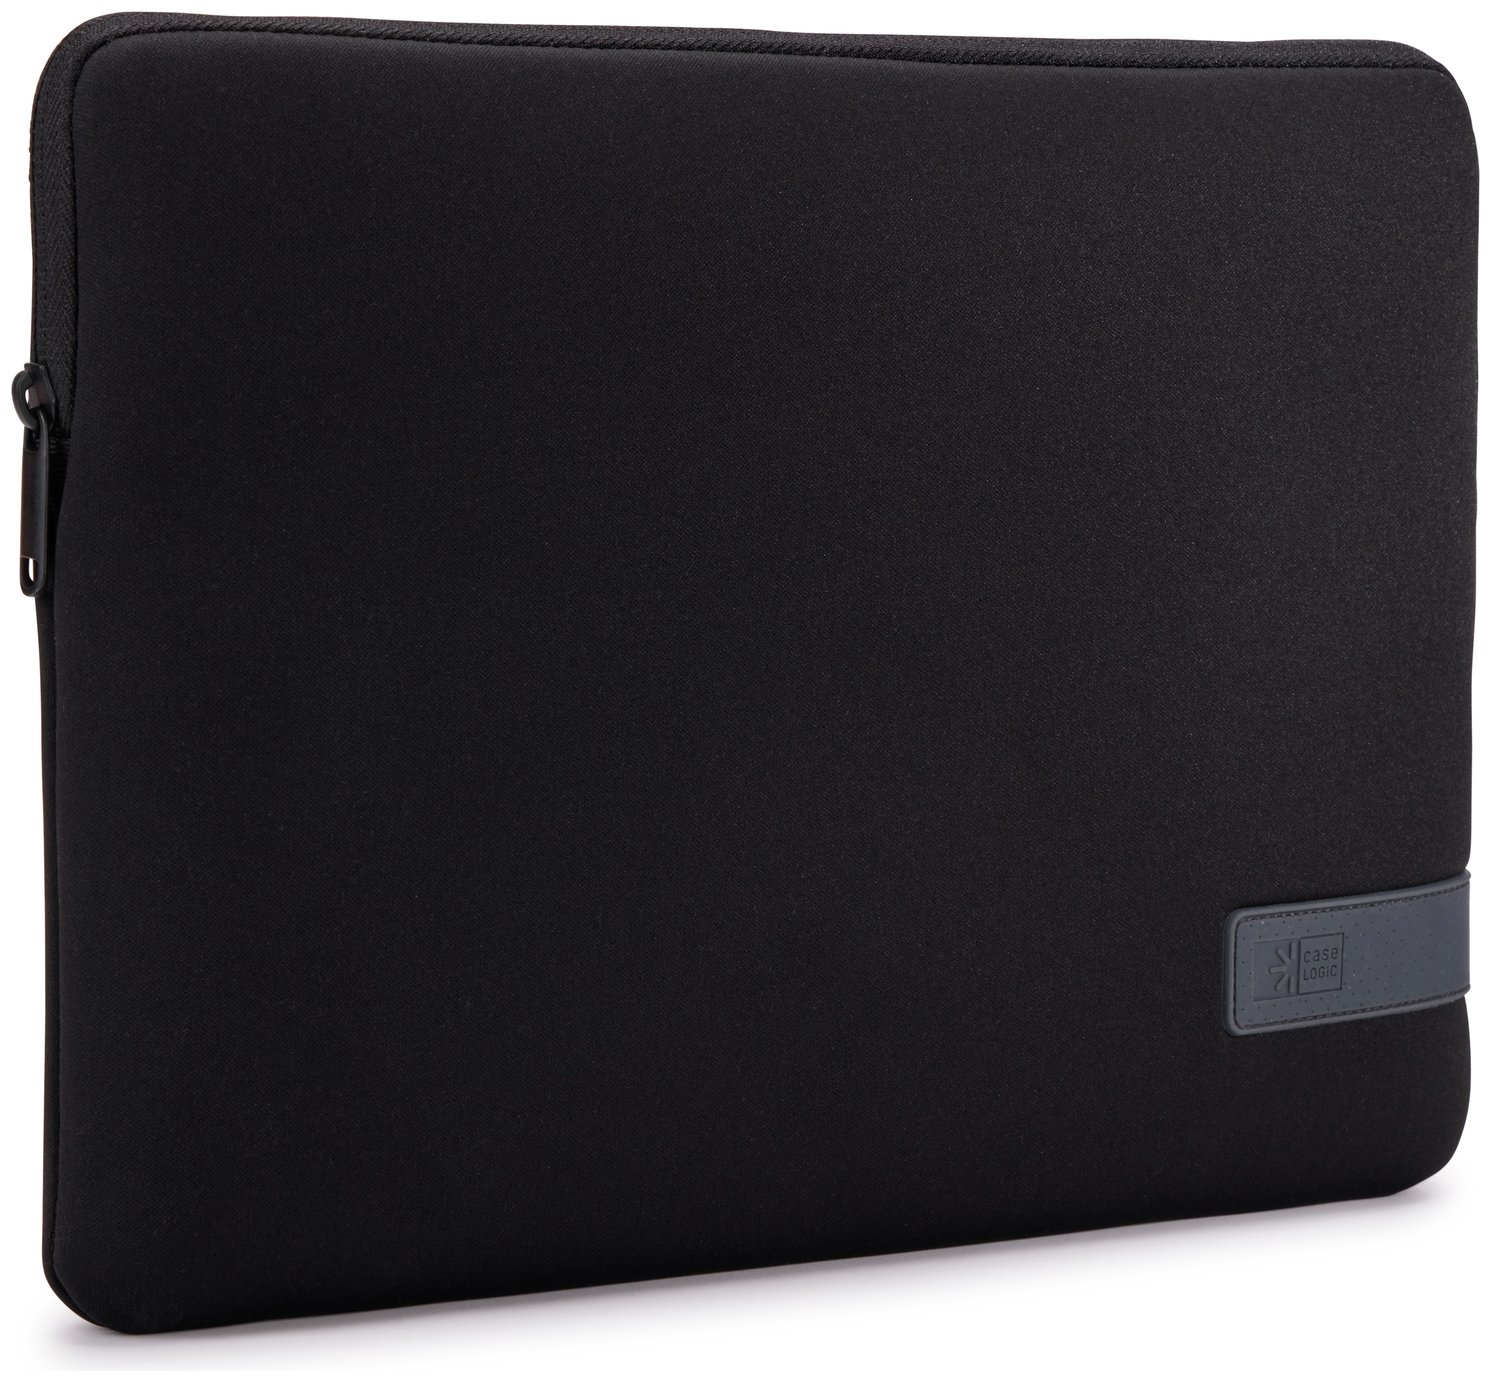 CASE LOGIC Reflect 14 Inch MacBook Sleeve - Black